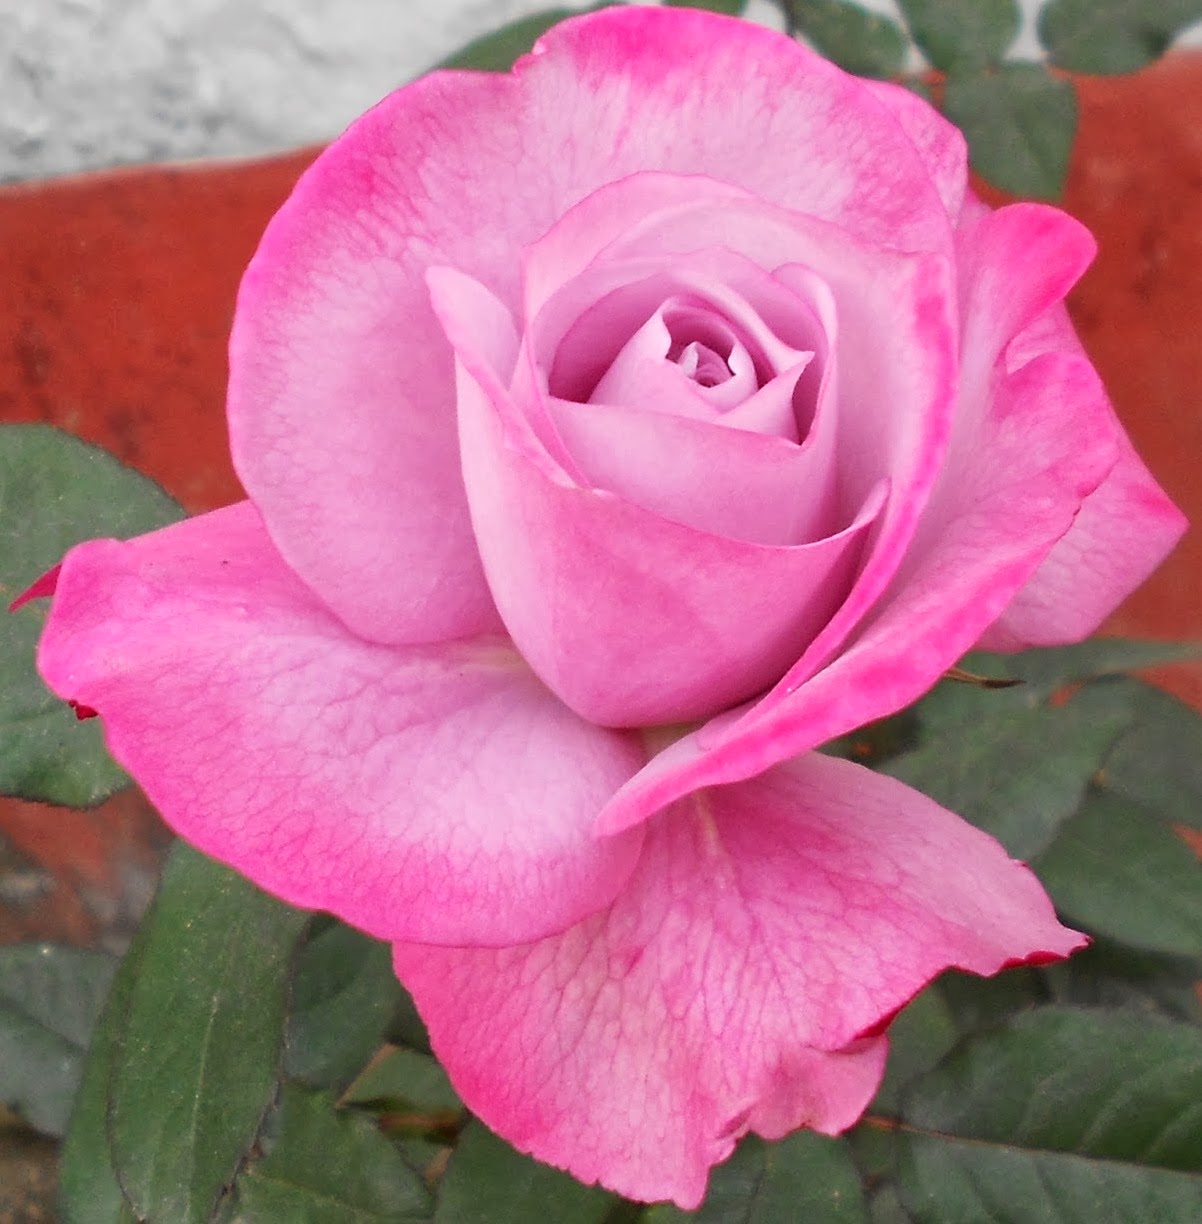 NATURAL & UNIQUE PHOTOGRAPHY: ROSE FLOWERS